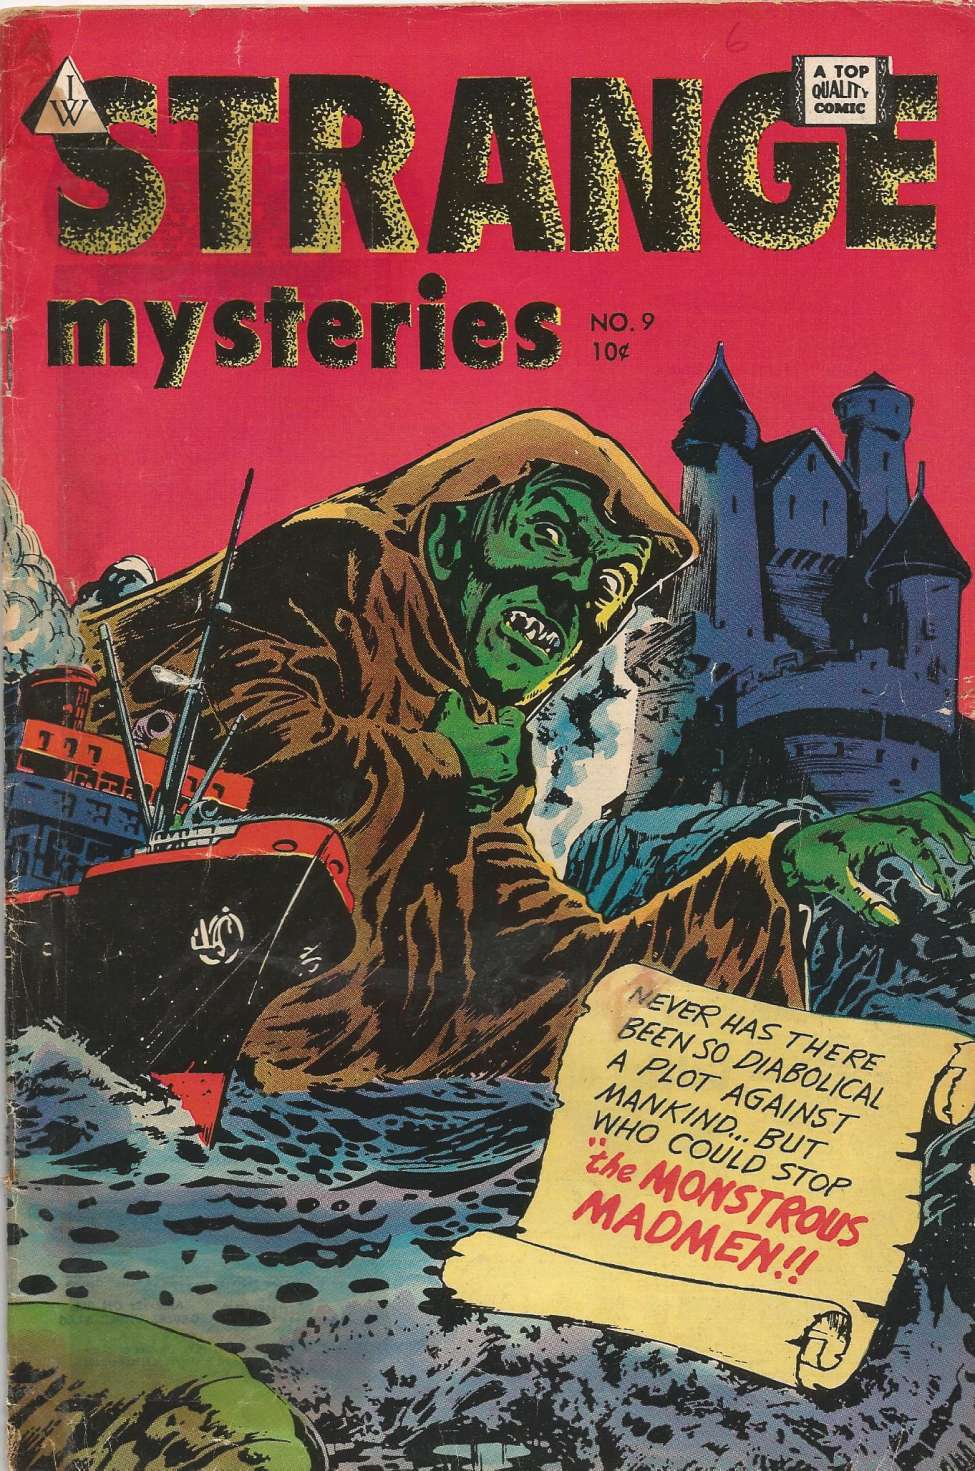 Comic Book Cover For Strange Mysteries 9